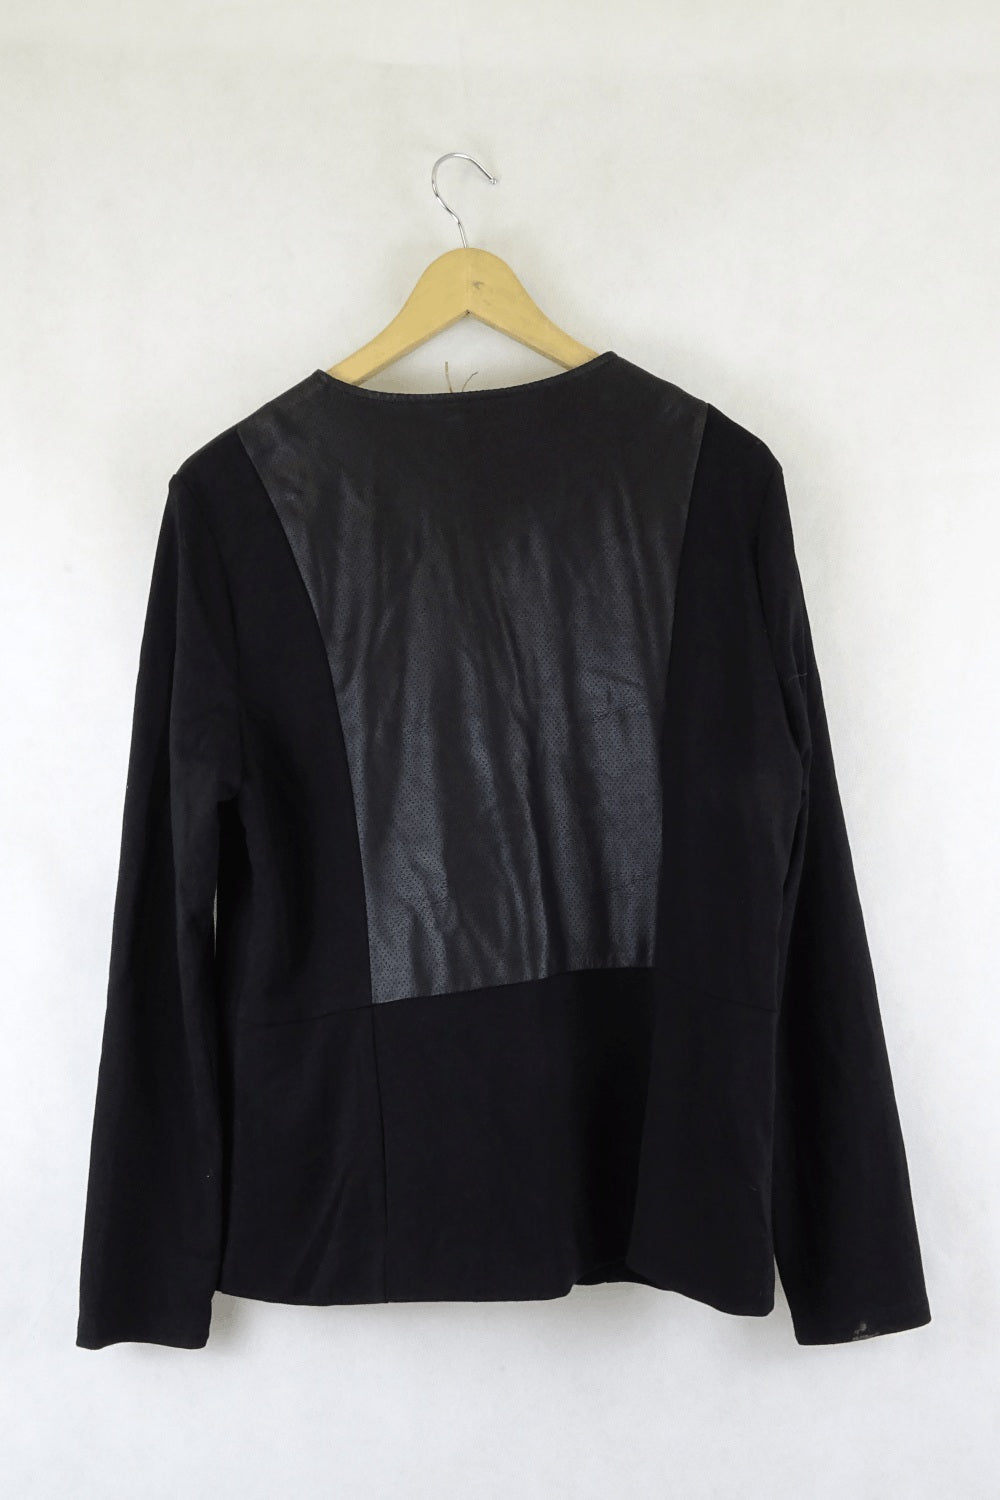 Threadz Black Faux Leather Jacket M